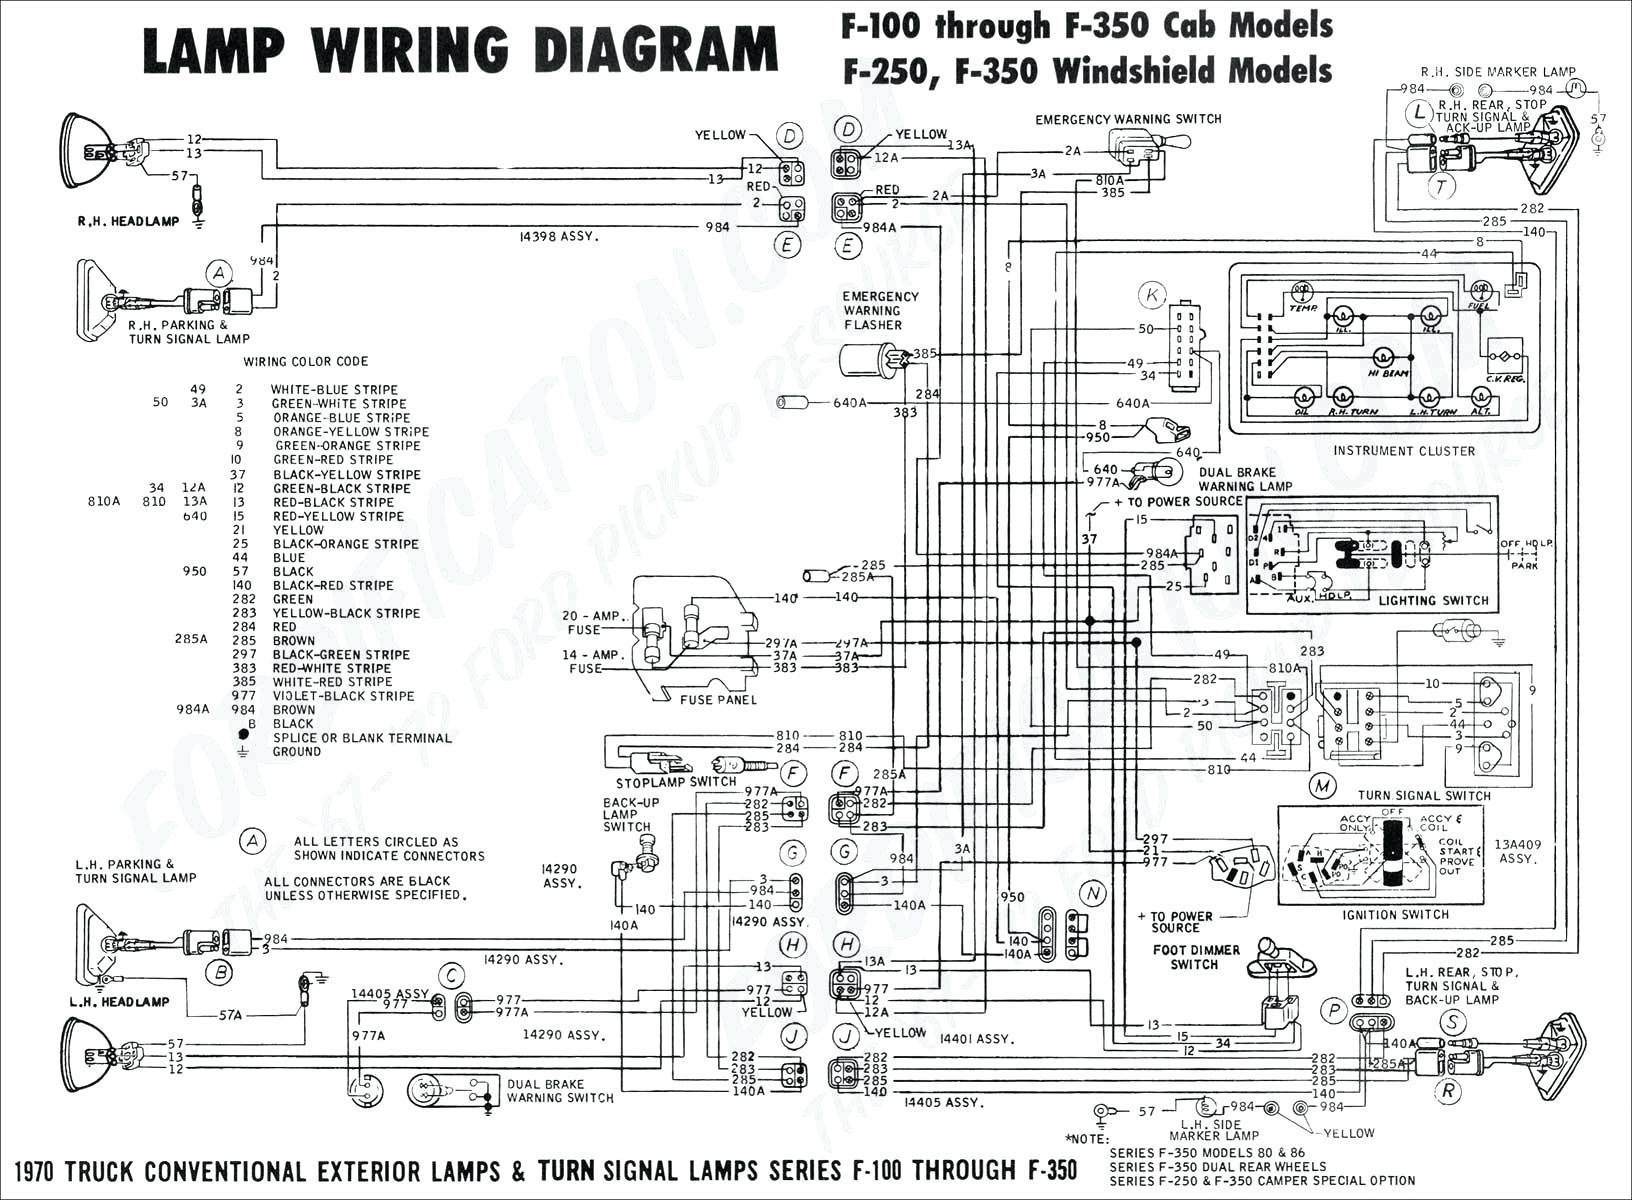 Obd2 Wire Diagram | Wiring Diagram - Data Link Connector Wiring Diagram